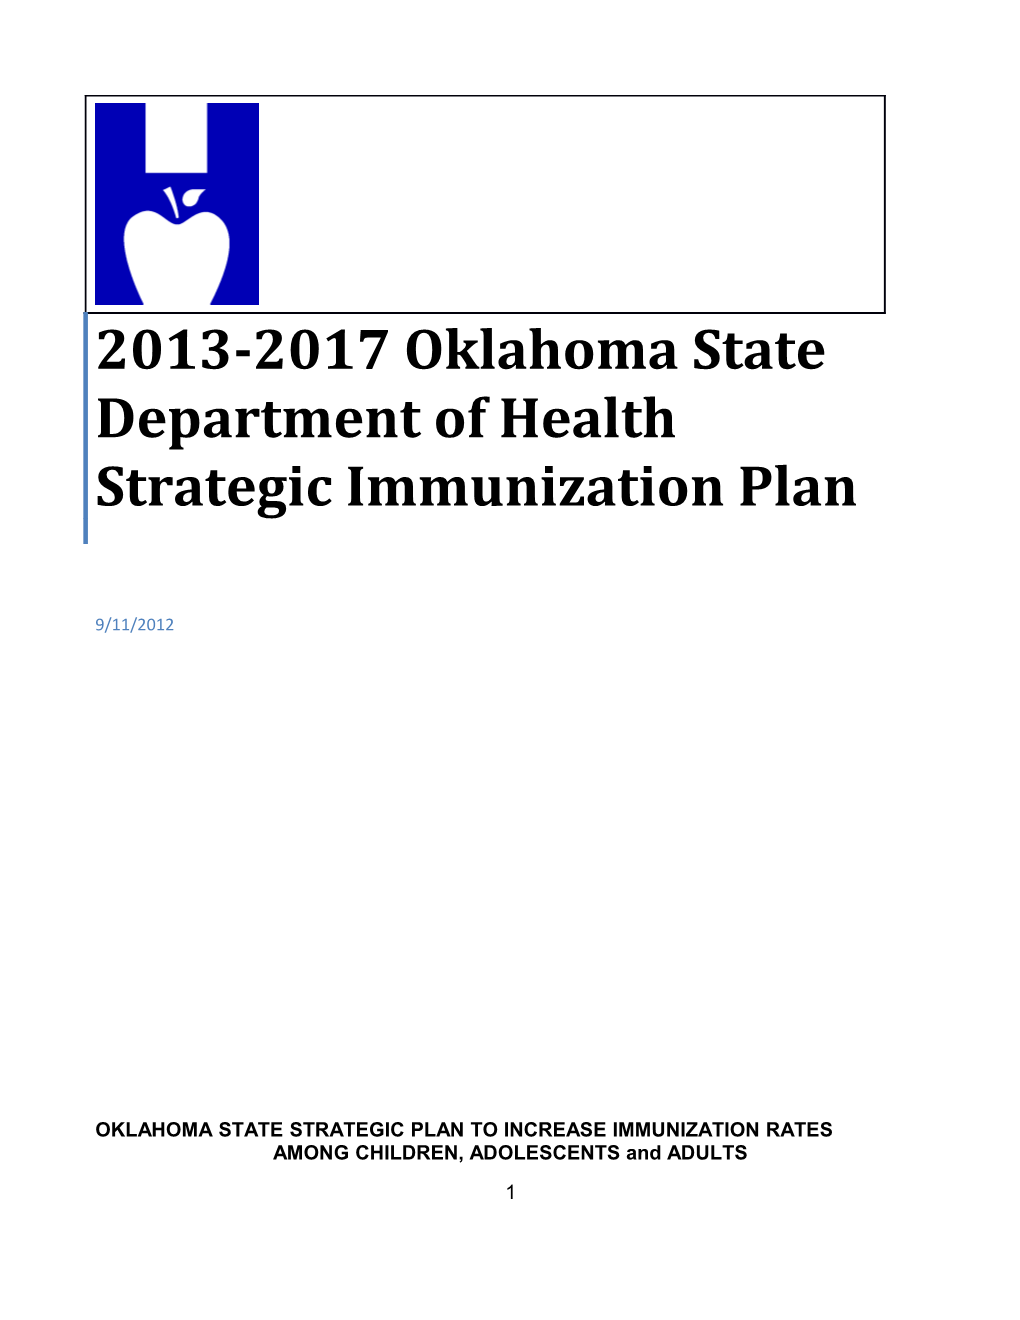 2013-2017 Oklahoma State Department of Health Strategic Immunization Plan